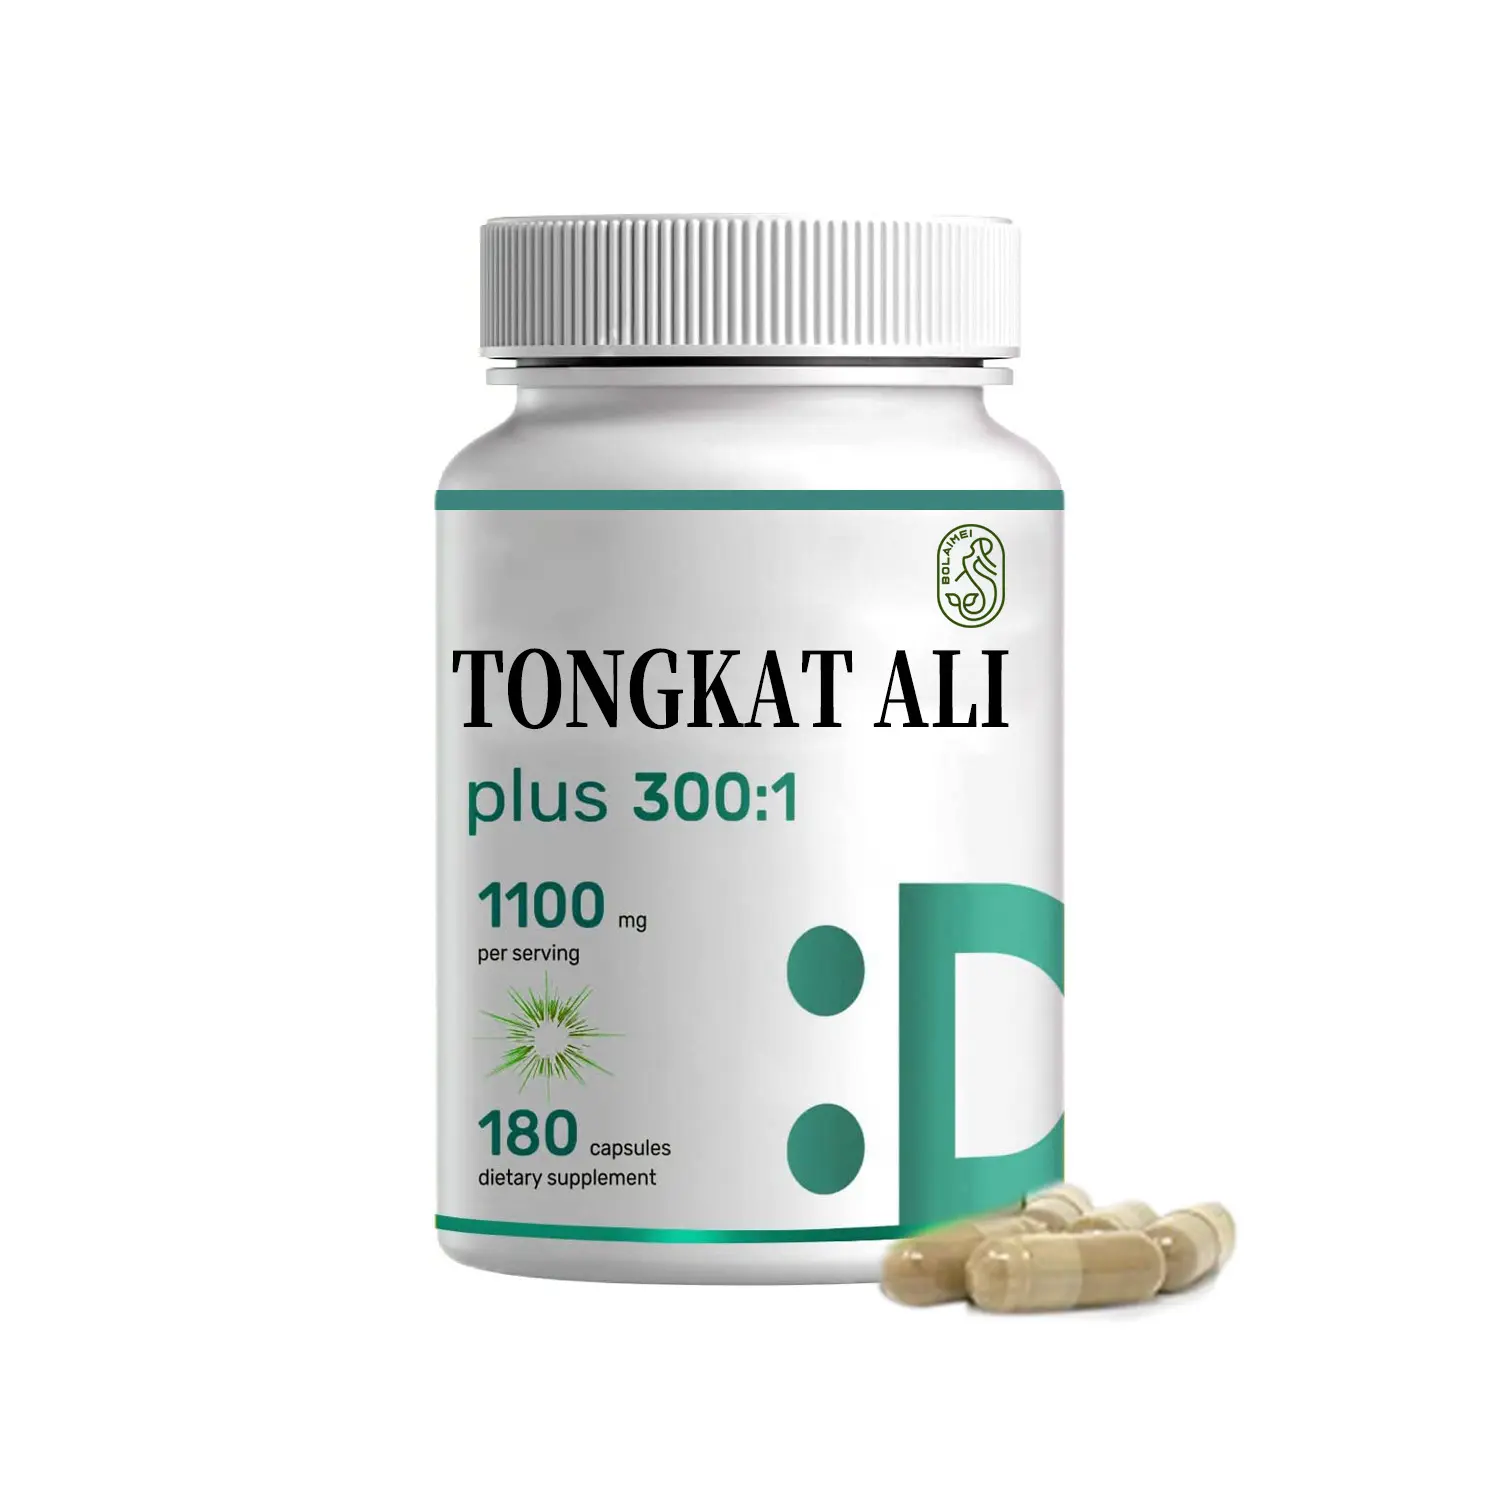 Vente en gros d'extrait de racine de tongkat ali Suppléments capsules de tongkat ali